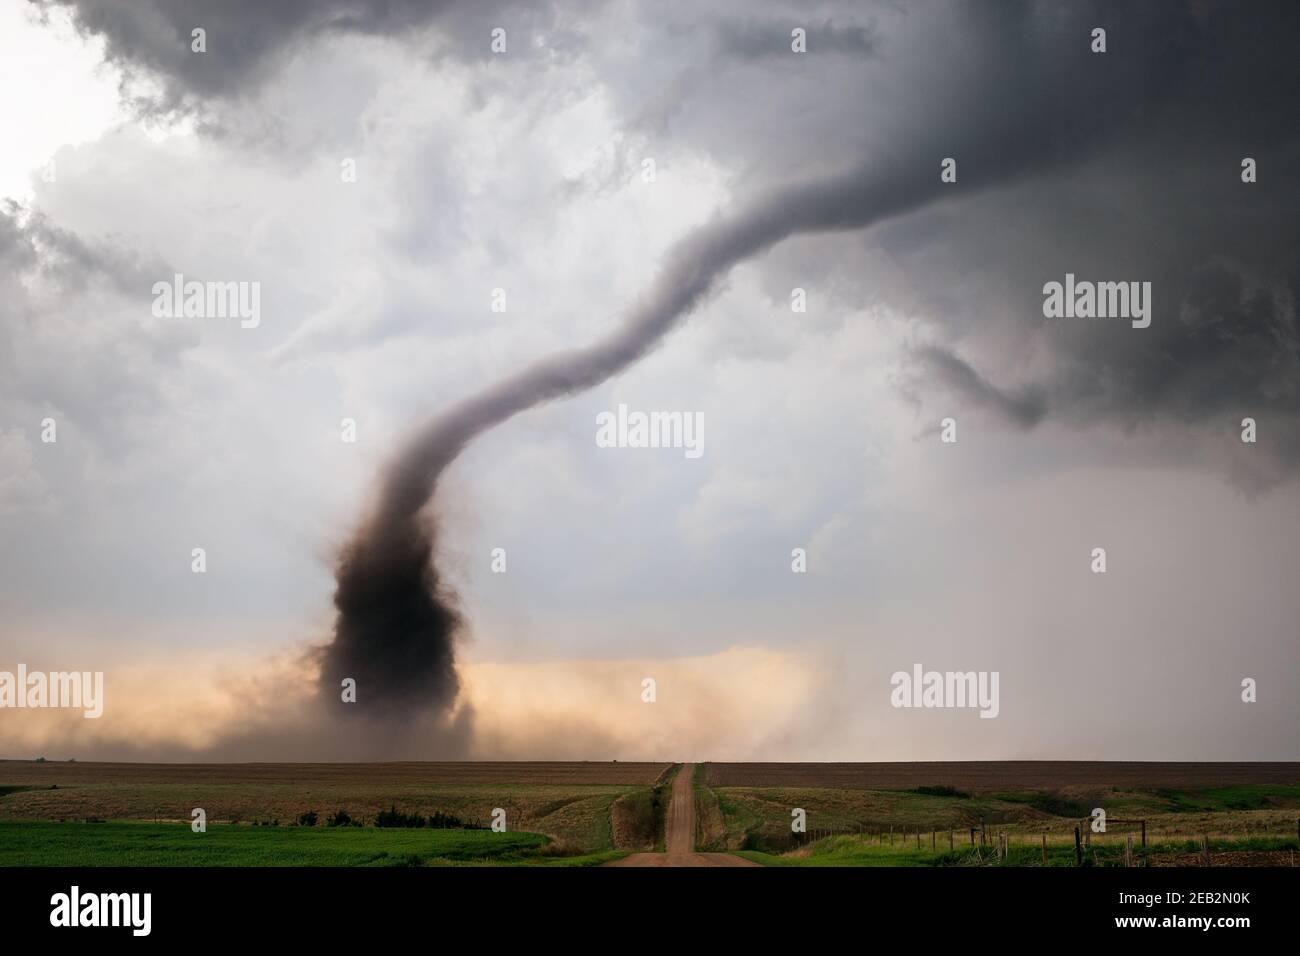 Tornado funnel and debris cloud under a supercell storm in McCook, Nebraska, USA Stock Photo